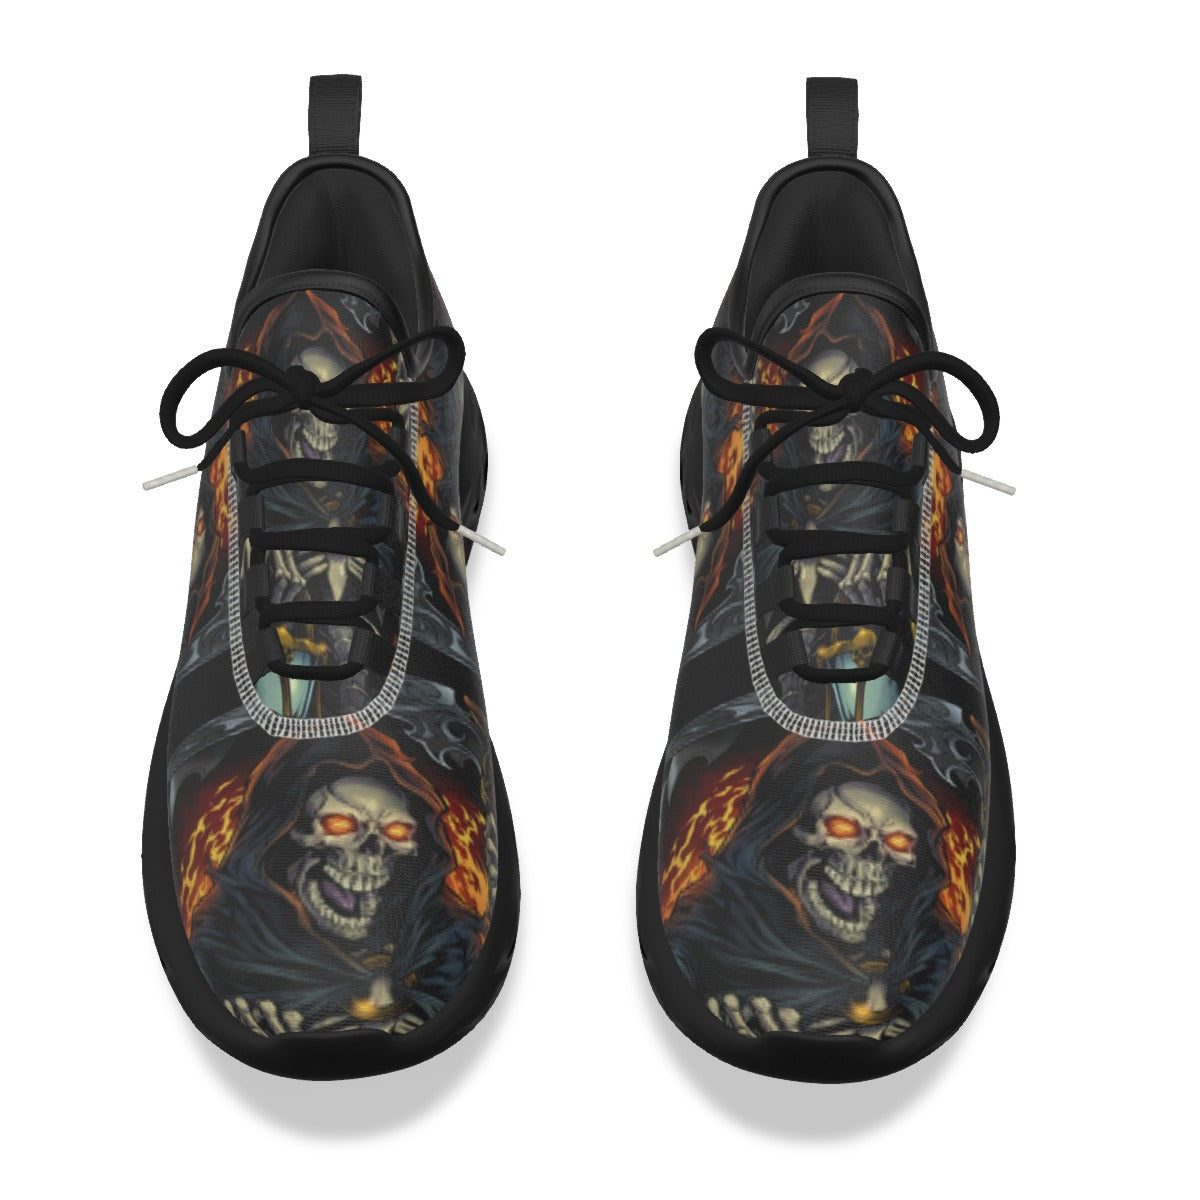 Flaming grim reaper skull Men's Light Sports Shoes